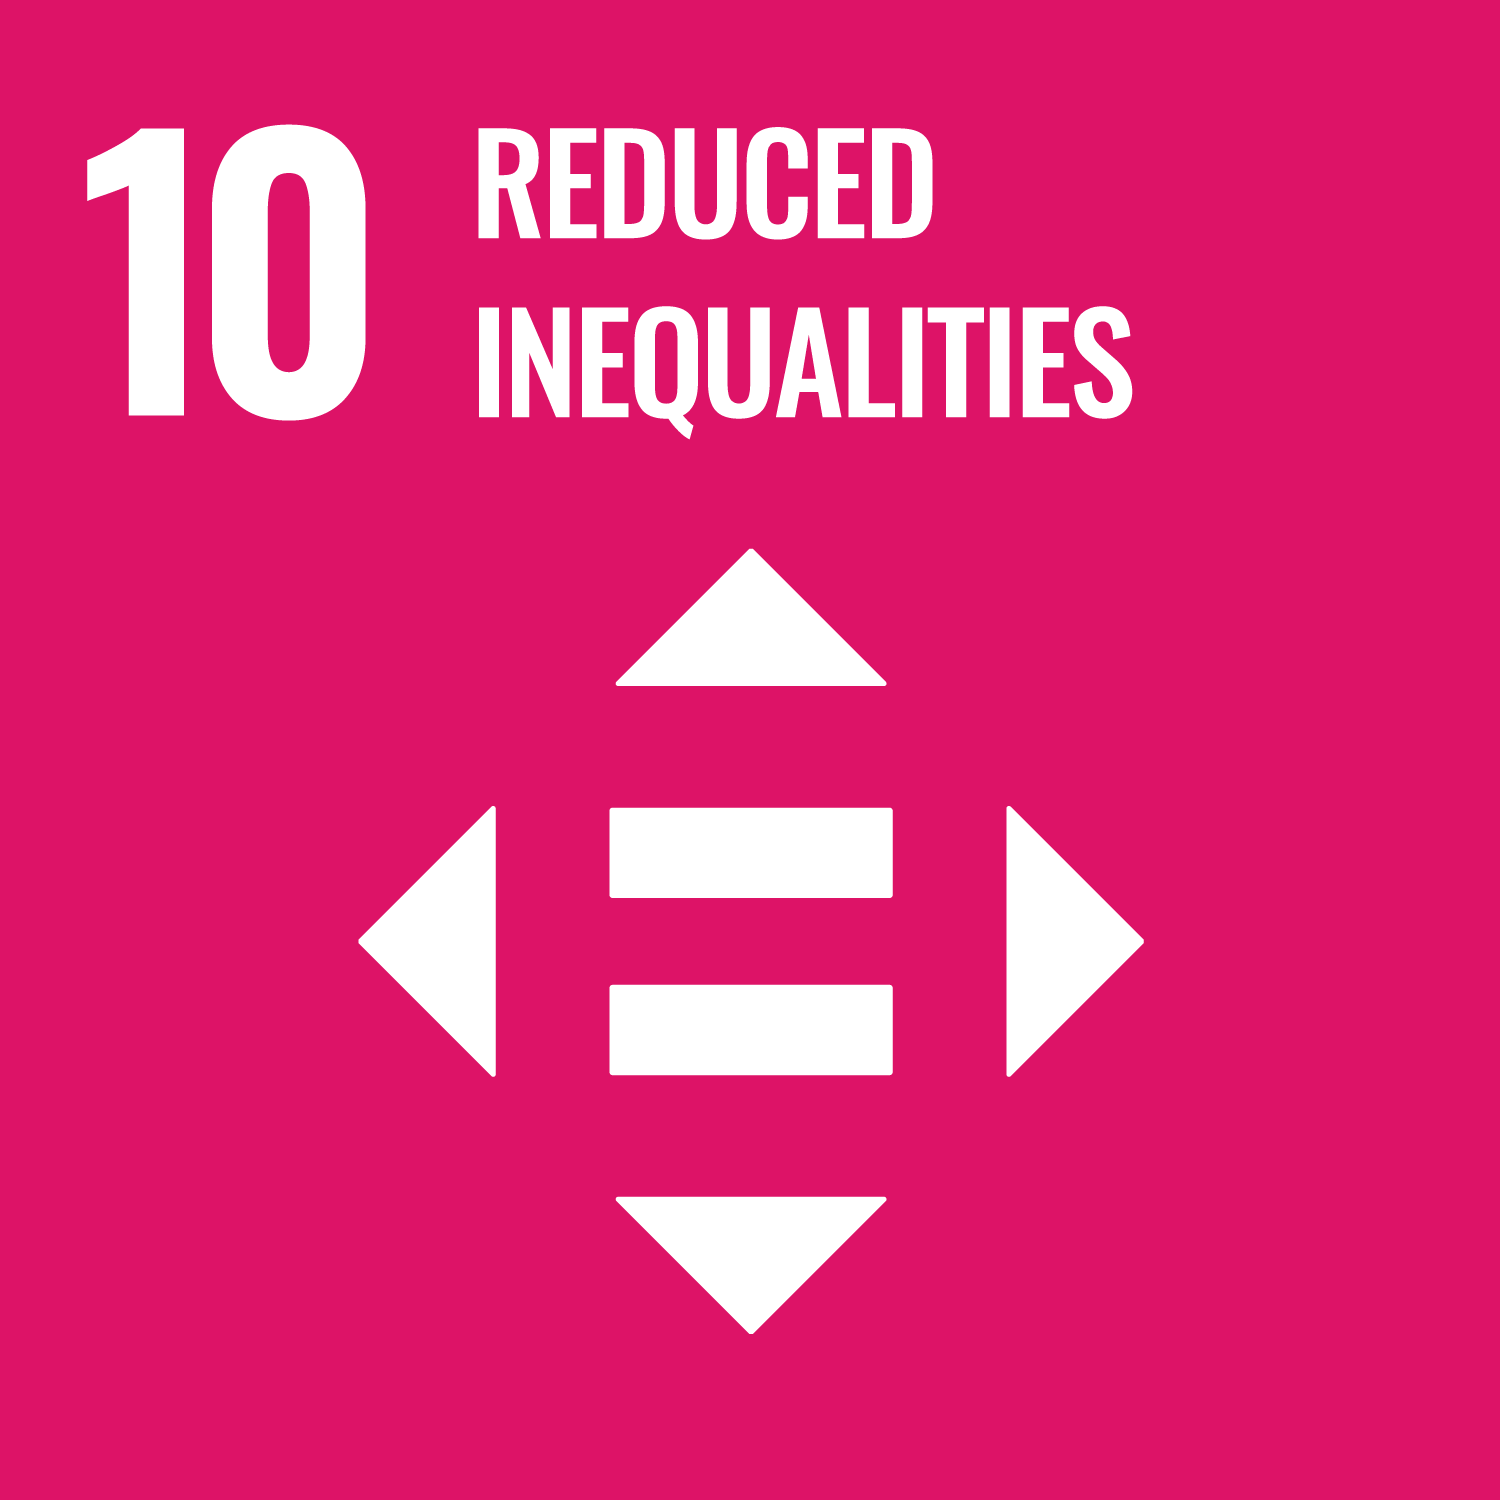 Reduced Inequalities (SDG10)